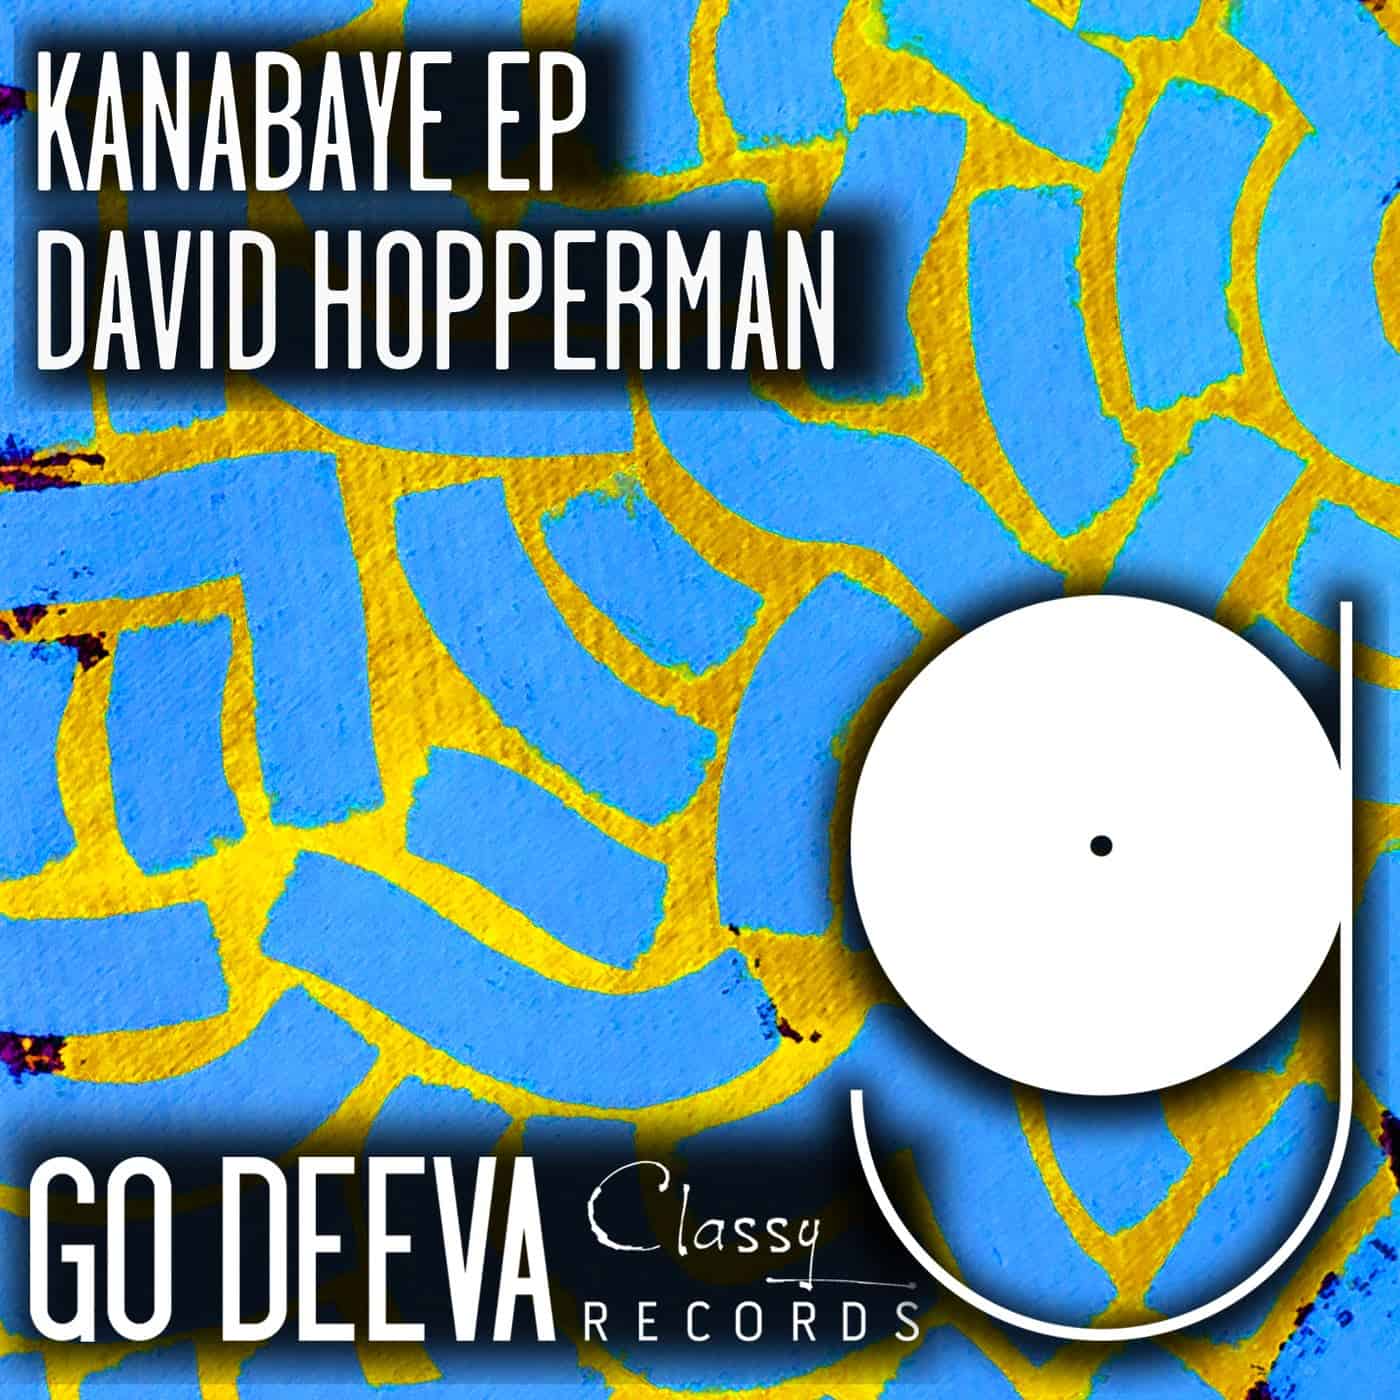 Download David Hopperman - Kanabaye Ep on Electrobuzz